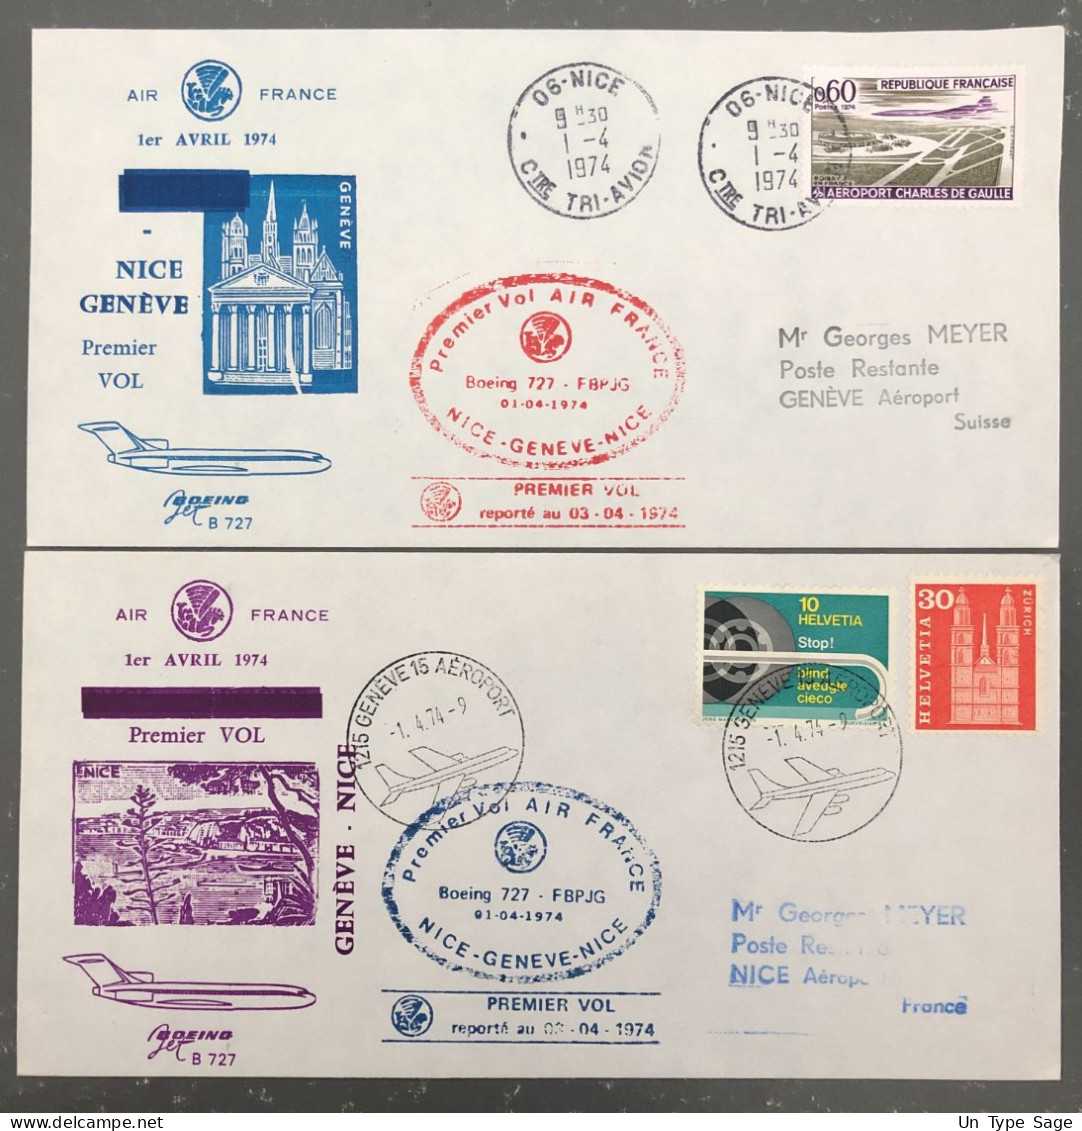 France, Premier Vol Nice, Genève 3.4.1974 - 2 Enveloppes - (B1473) - First Flight Covers